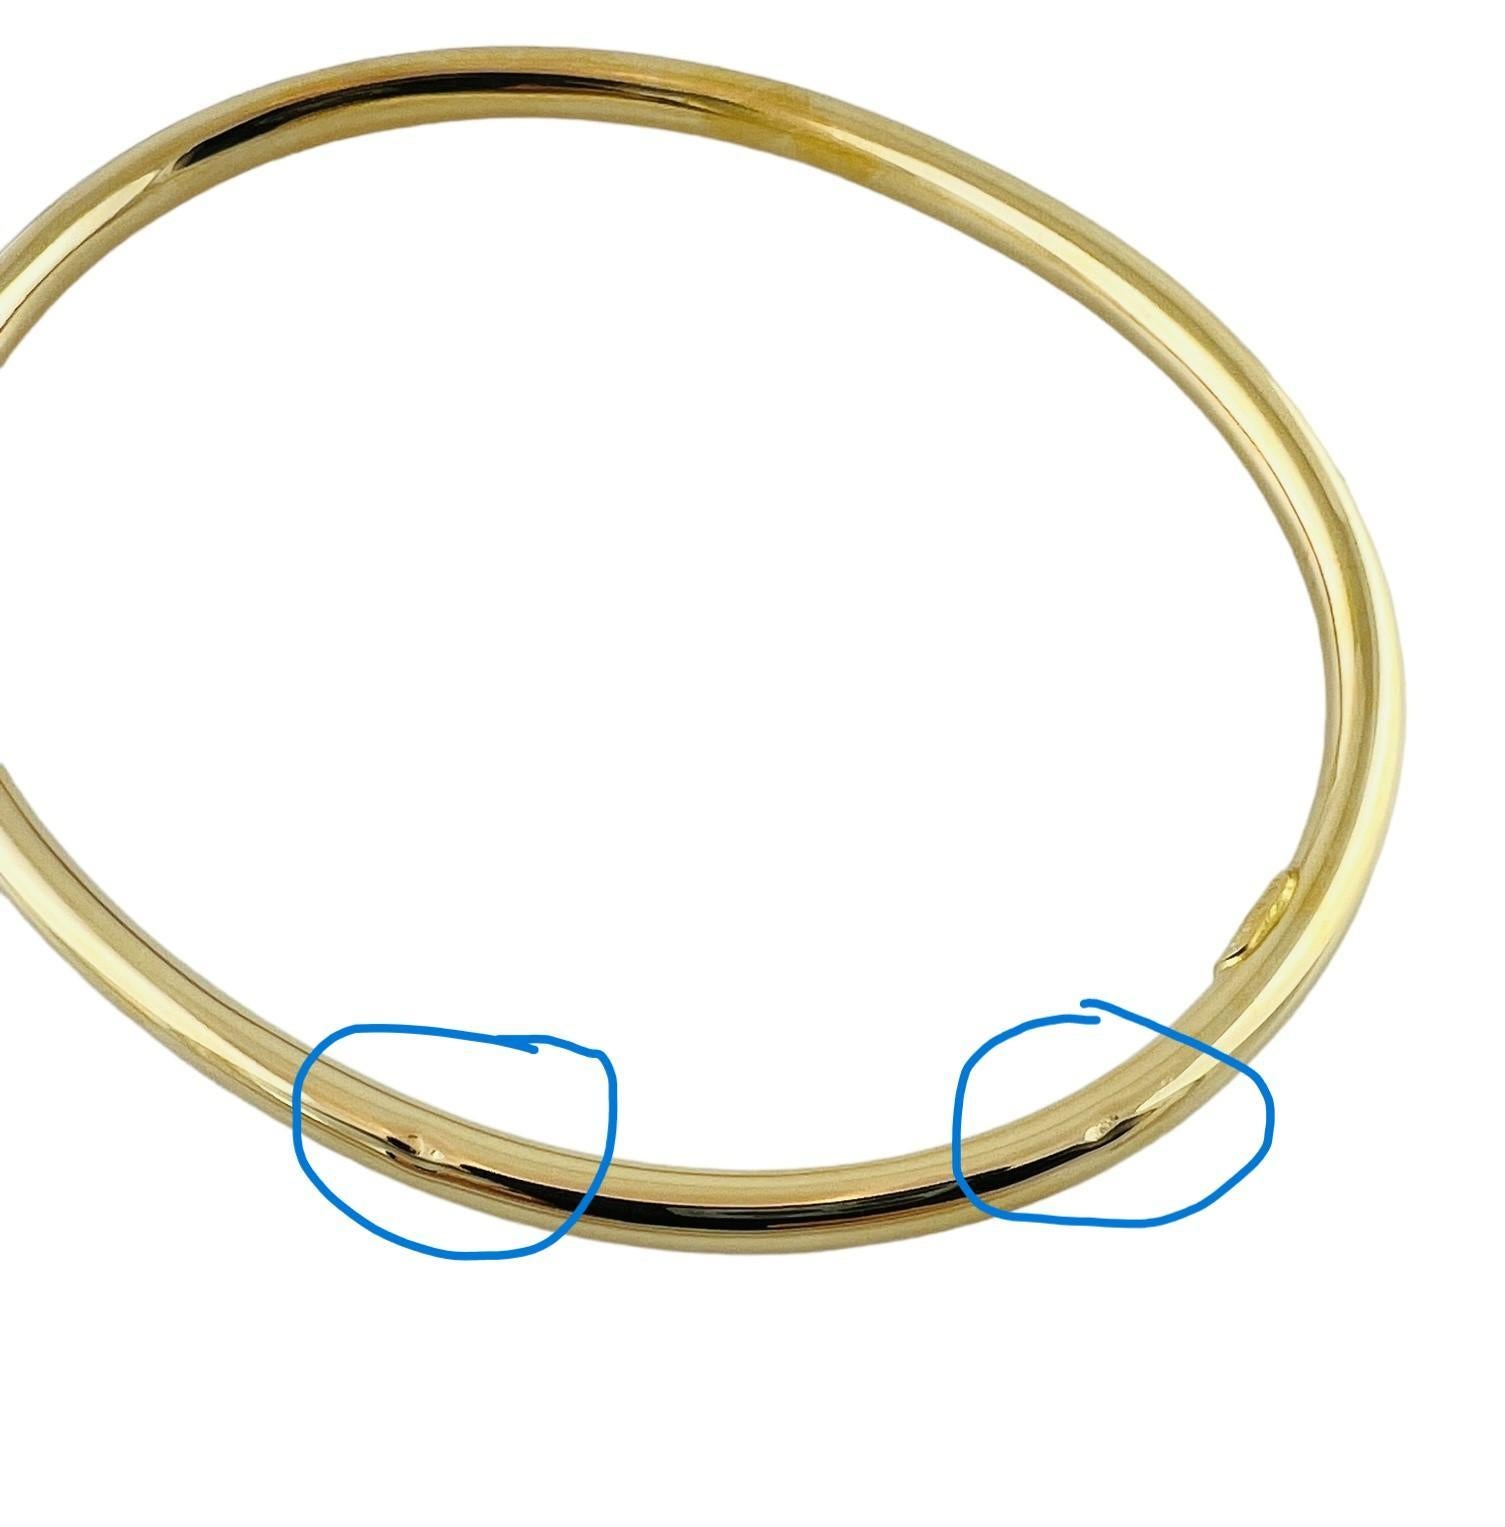 Tiffany & Co. 18K Yellow Gold Oval Bangle Bracelet #16680 1